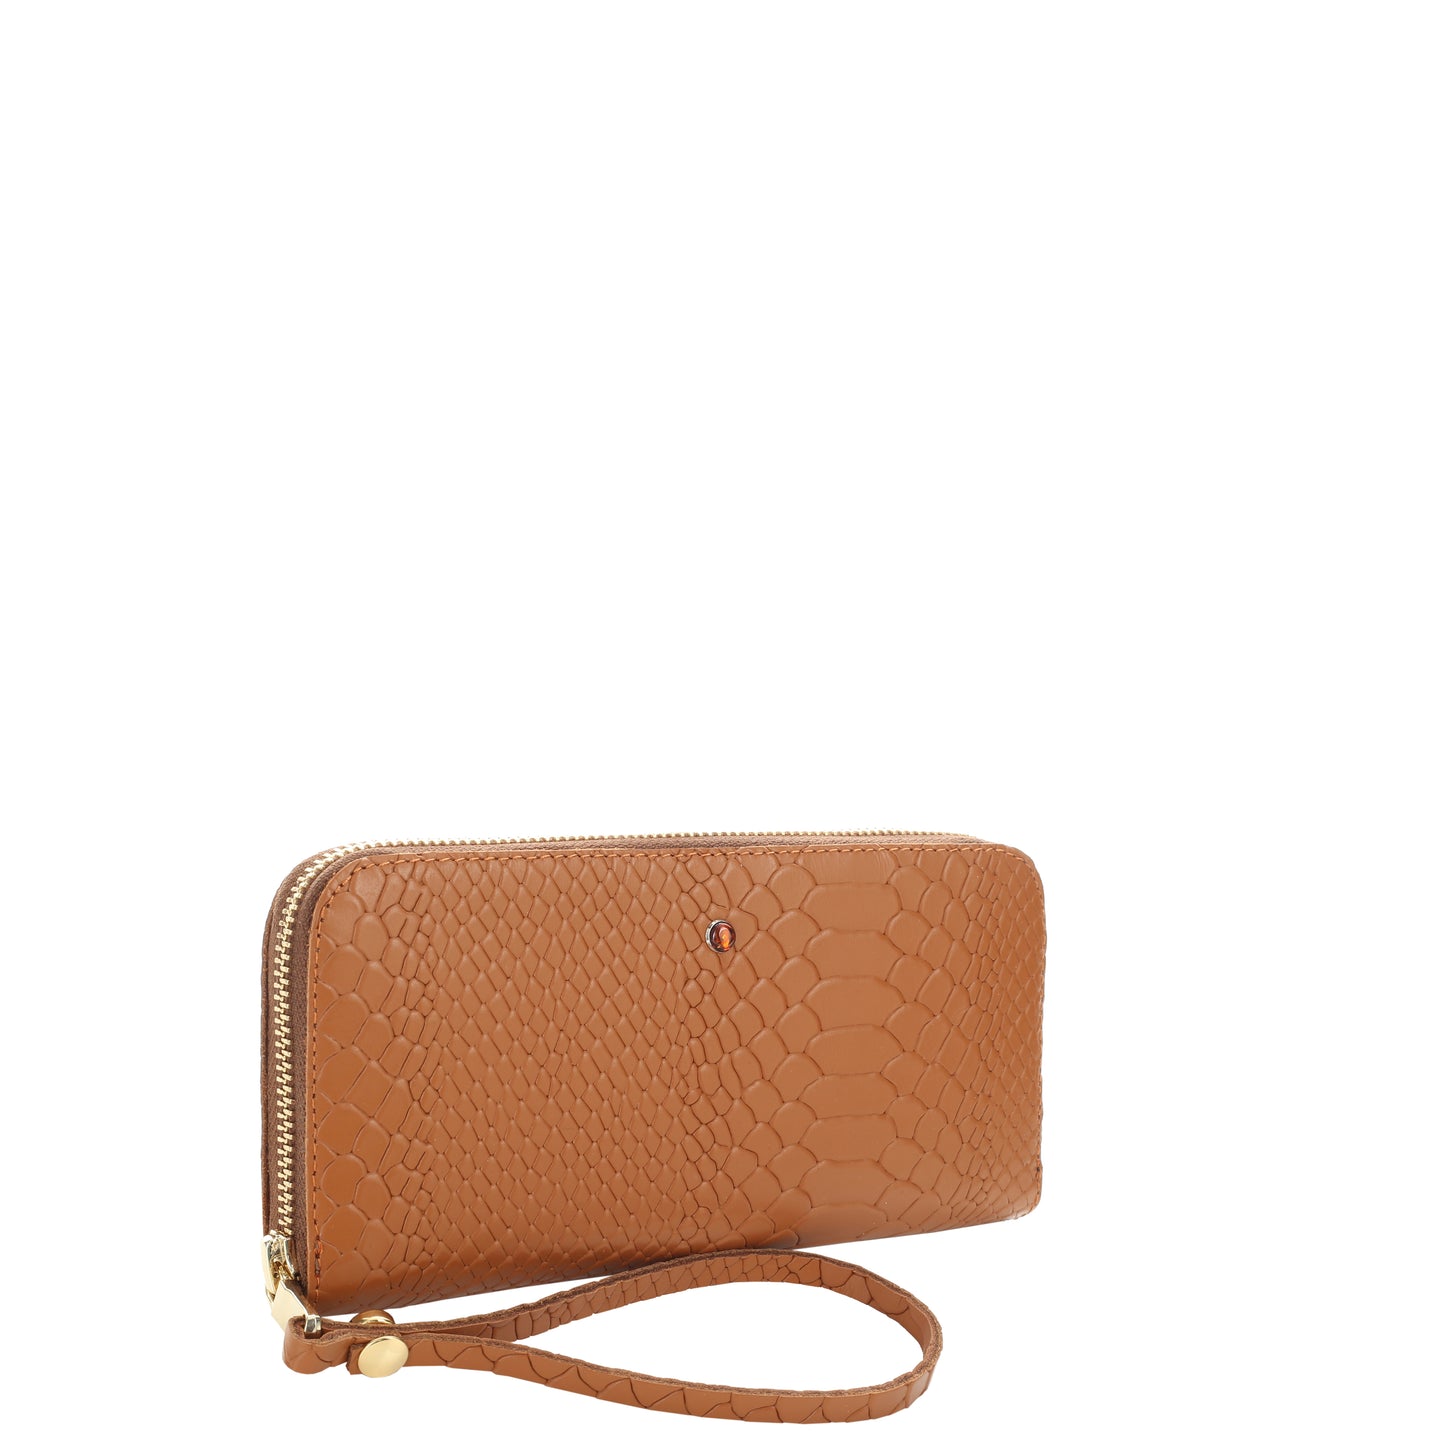 Women's cognac leather wallet